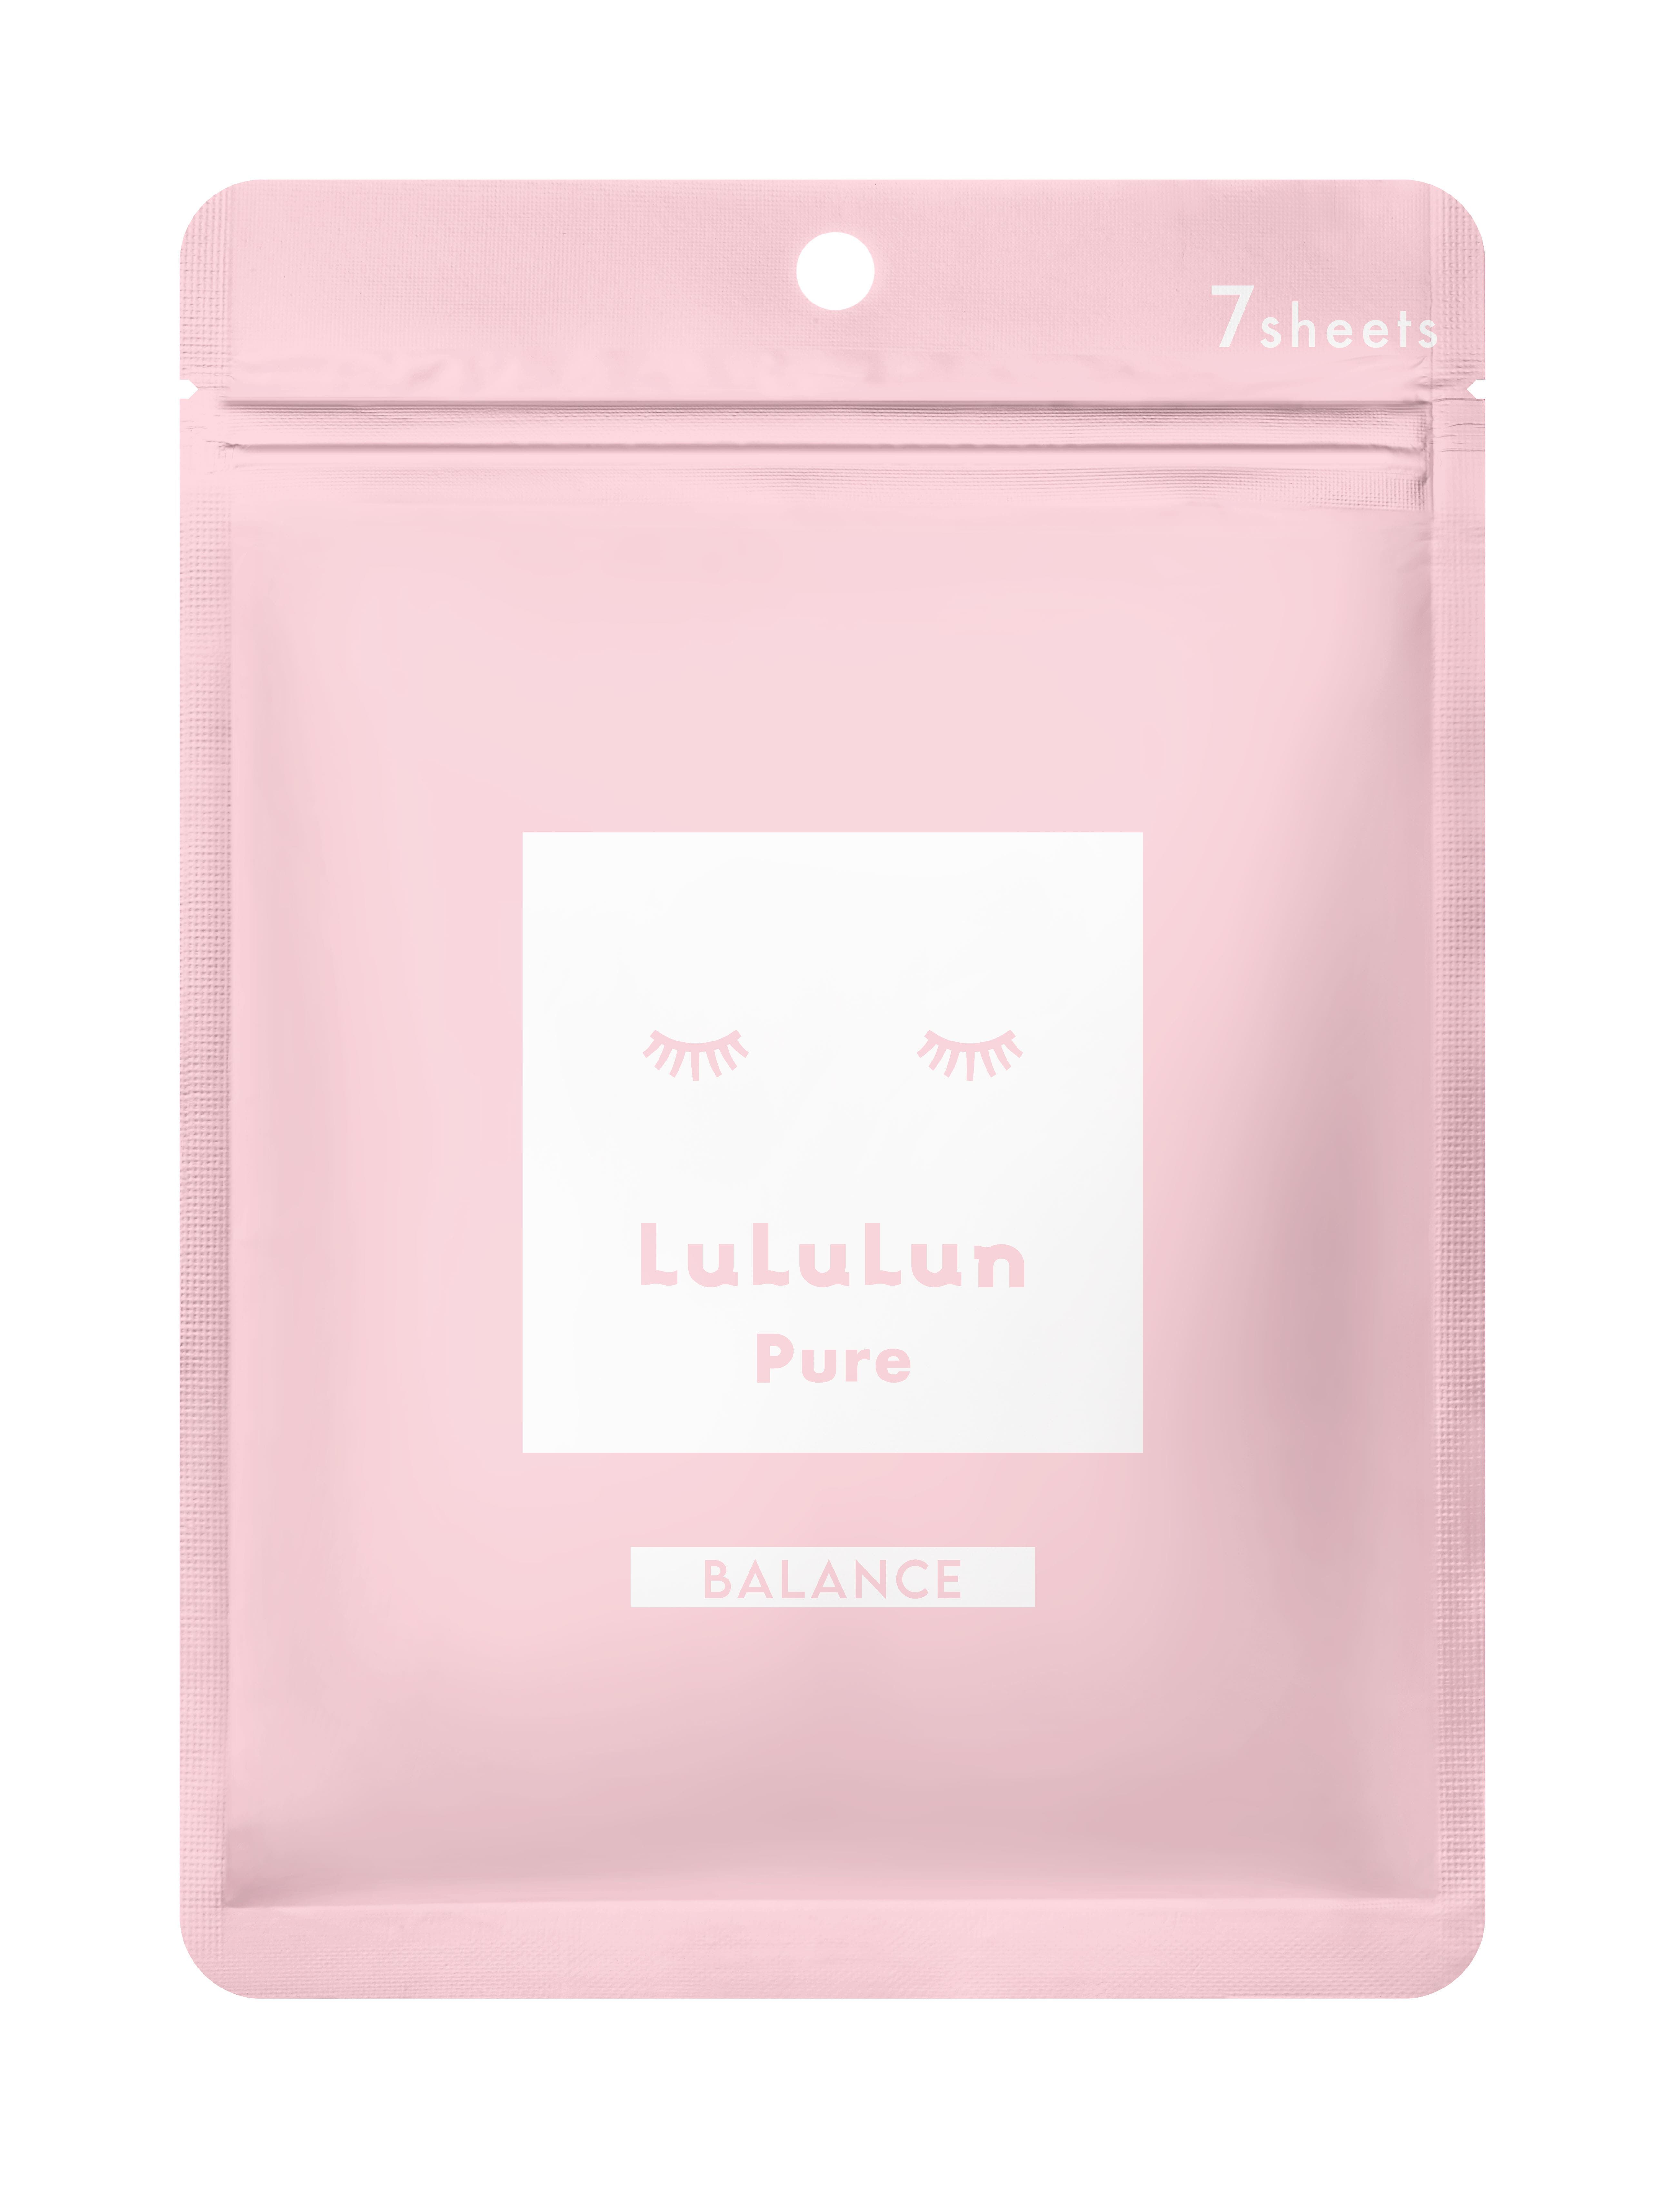 цена Маска для лица Lululun Pure Balance, 7 шт/1 упаковка